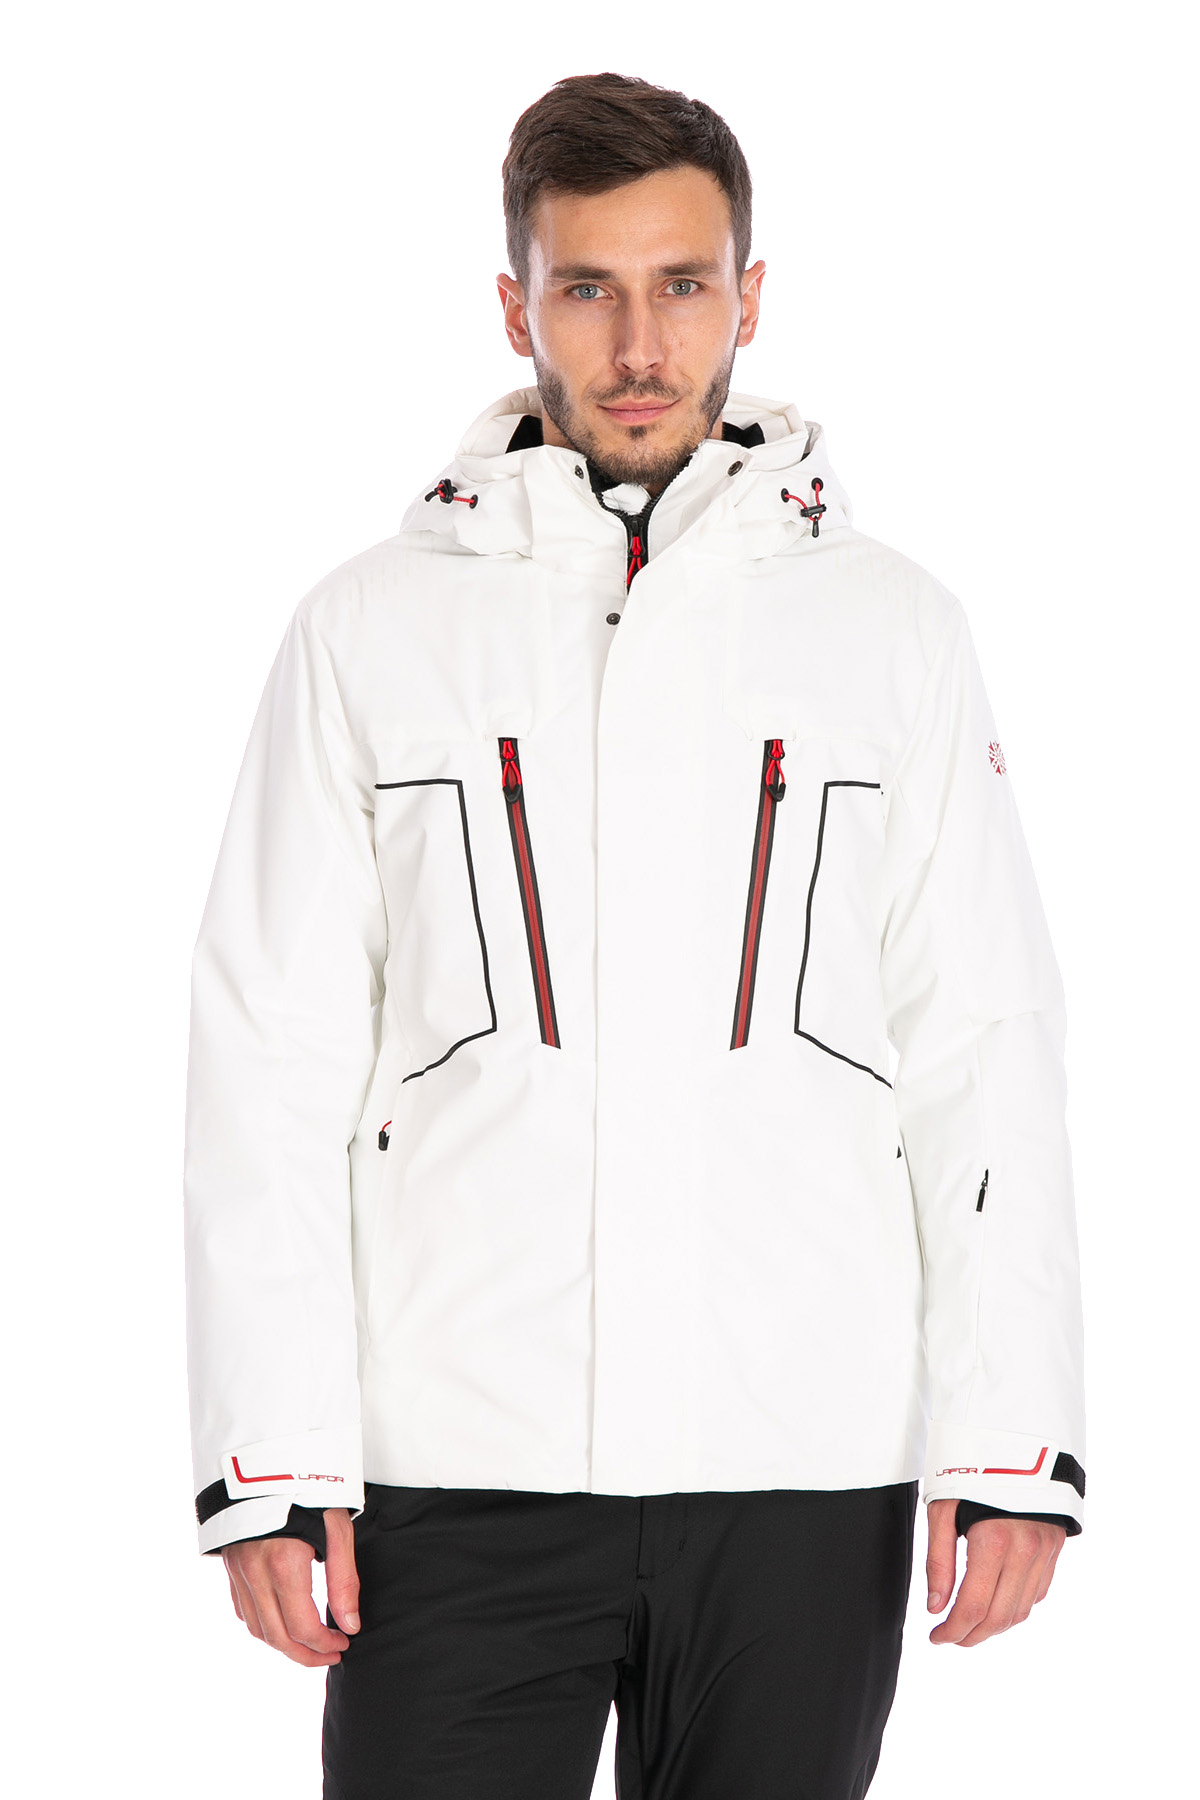 Мужская горнолыжная Куртка Lafor Белый, 767013 (56, 3xl)